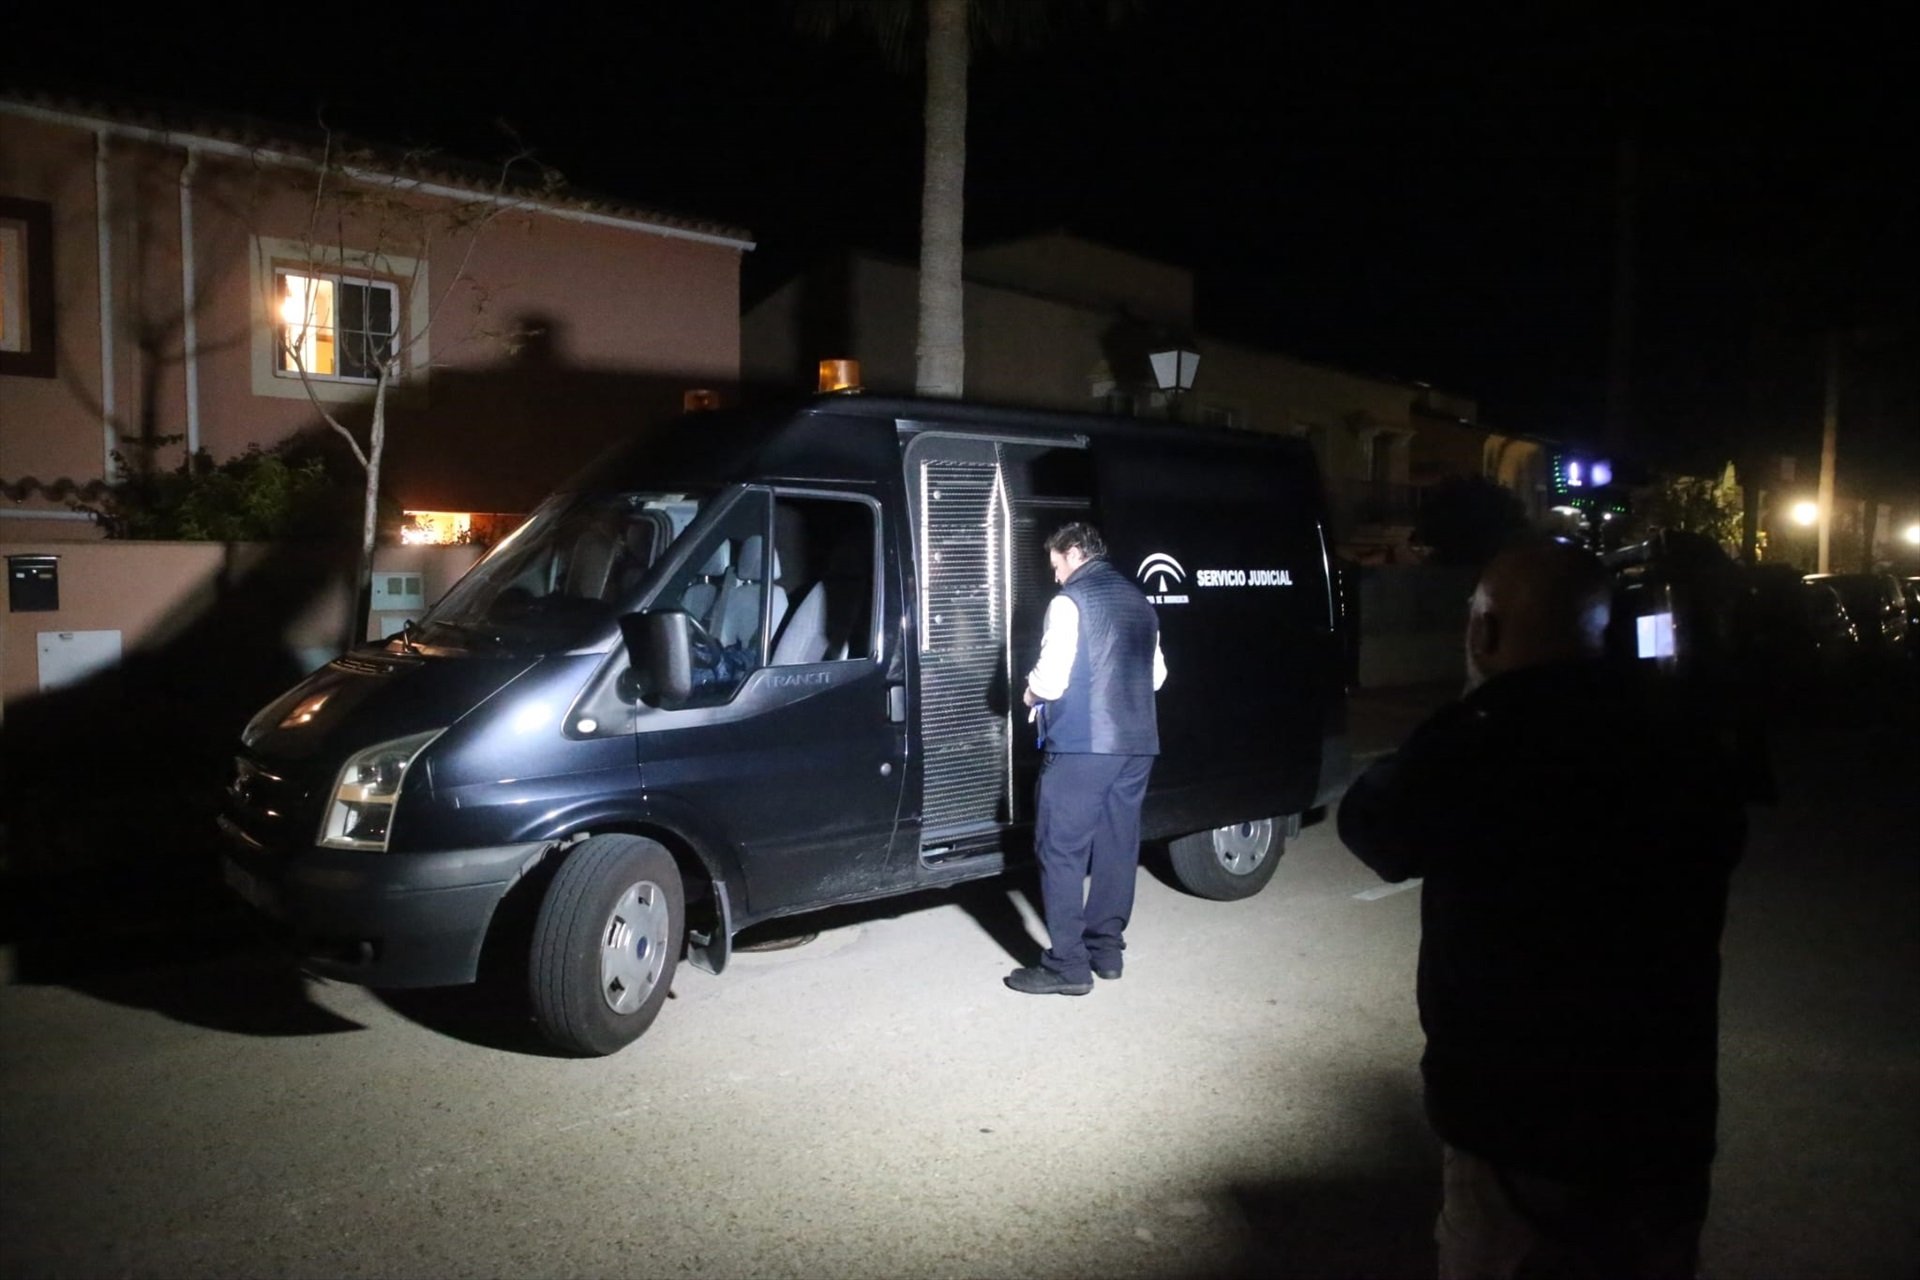 Domicili on han trobat morts a trets un home i una dona a La Línea (Cadis) / Nono Rico, Europa Press